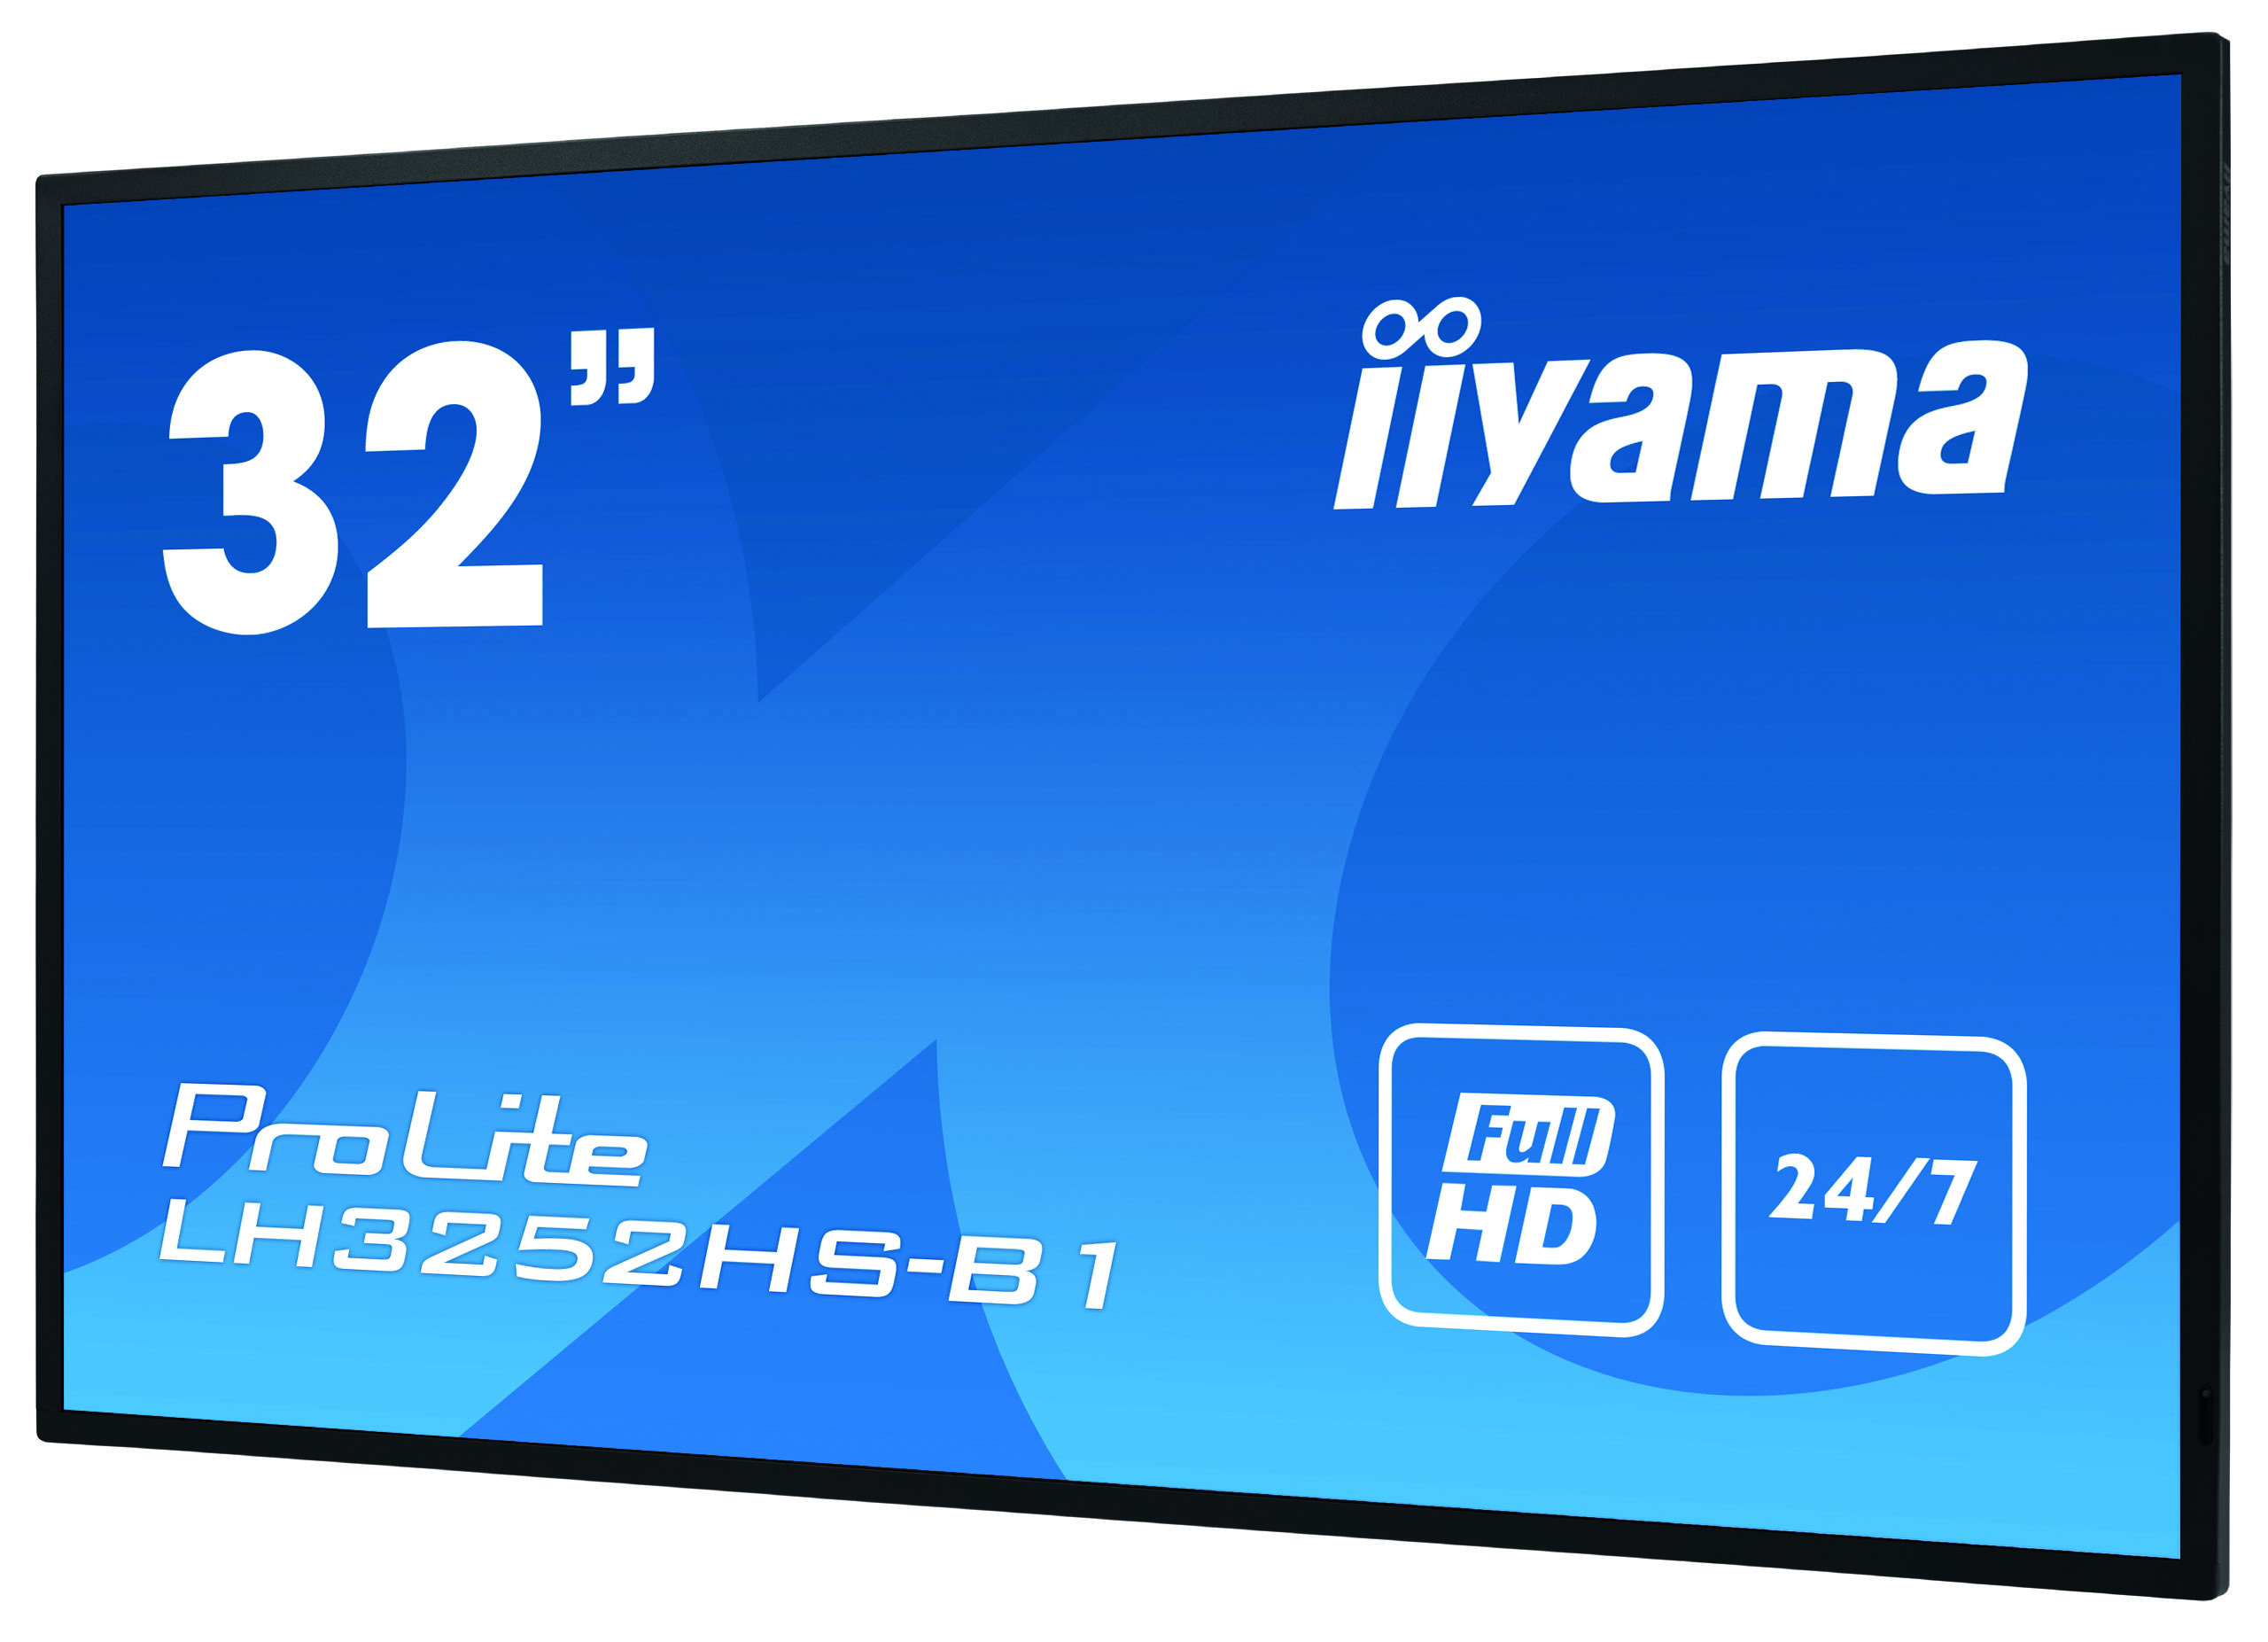  LH3252HS-B1 32inch FHD IPS Landscape and Portrait 400cd/m2 DVI-I VGA 2xHDMI 2xUSB 2.0 LAN RJ45 RS232C Android 8 OS